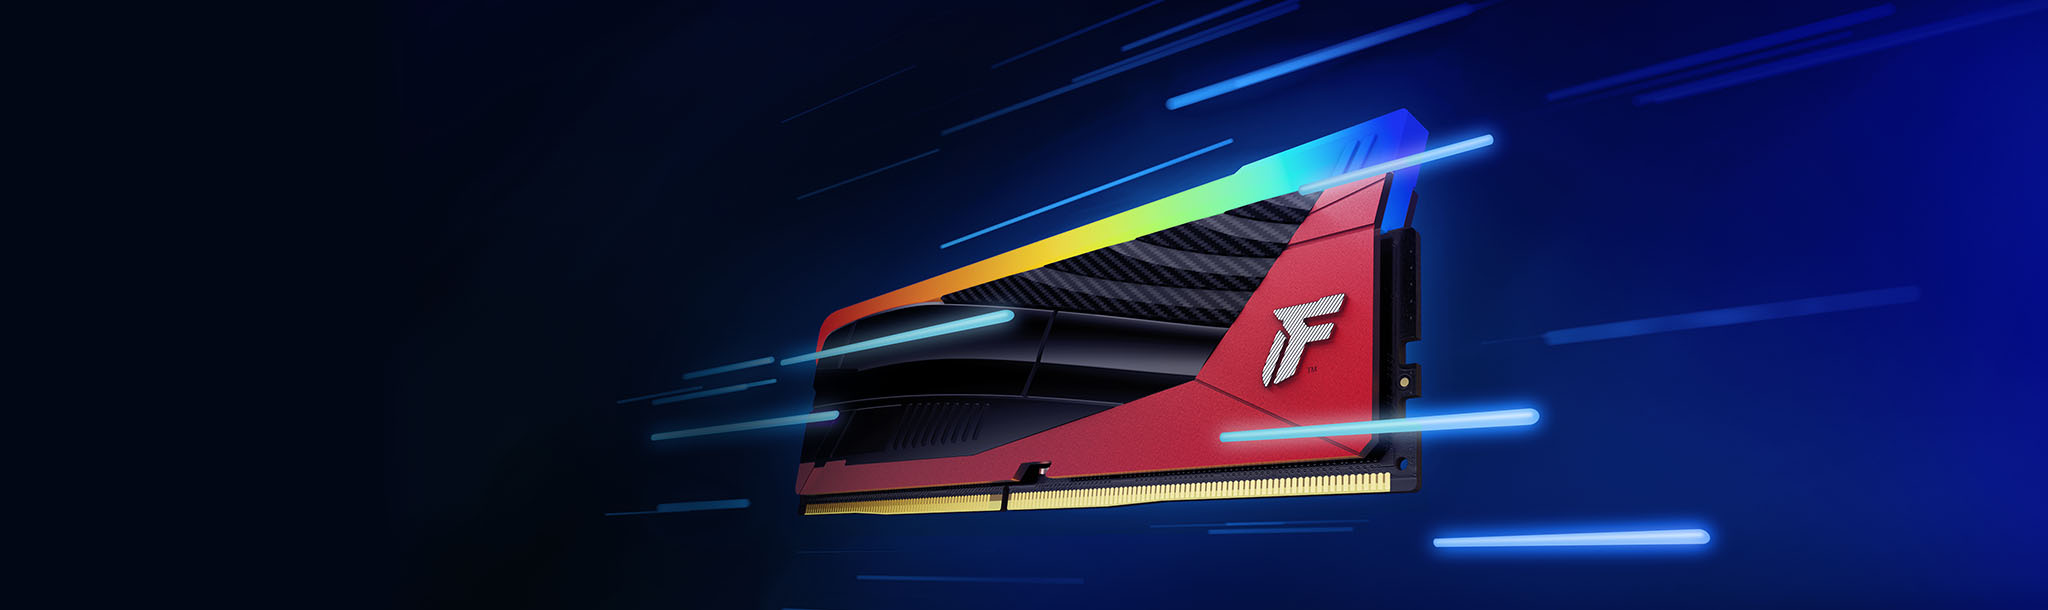 Kingston FURY Renegade DDR5 RGB Limited Edition 記憶體模組周圍圍繞著象徵速度的動態模糊線條